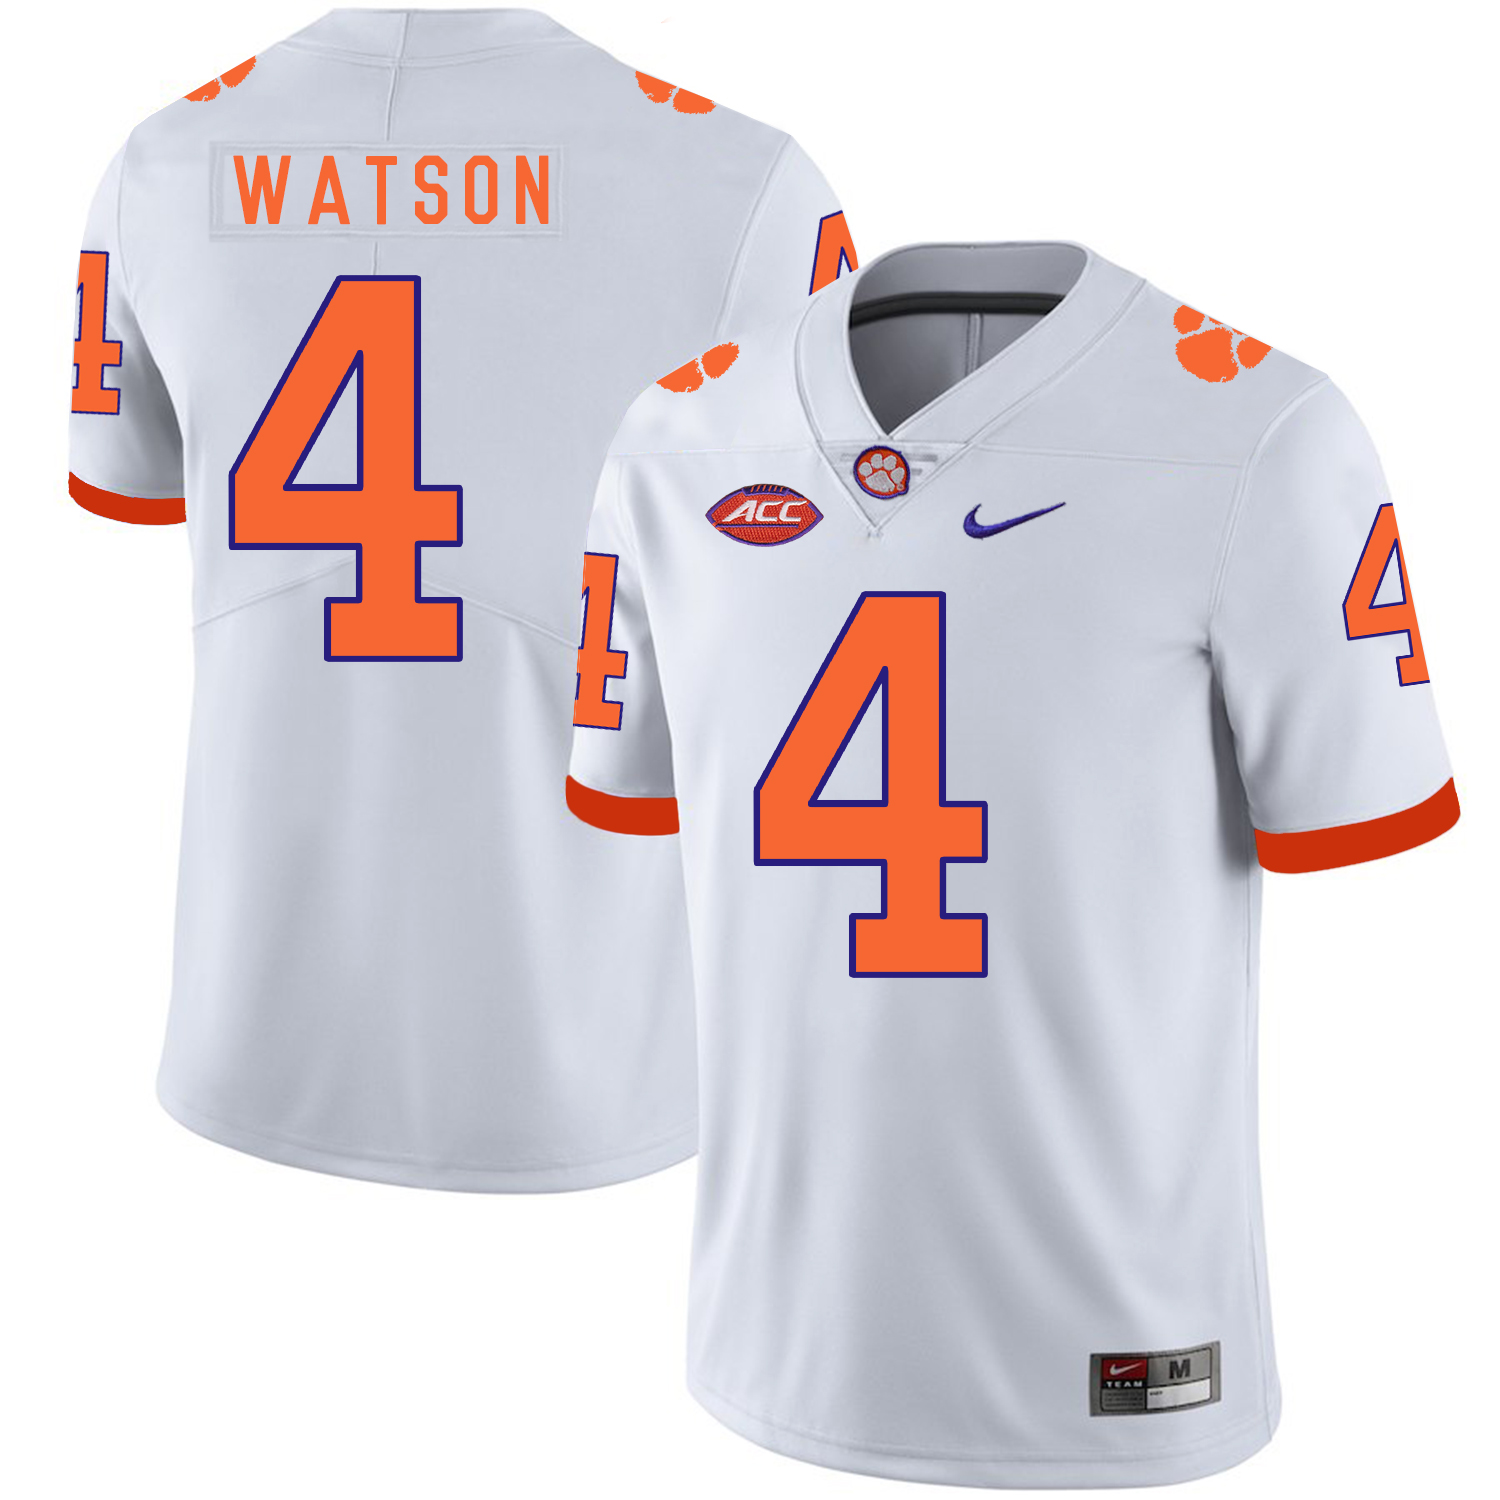 Clemson Tigers 4 Deshaun Watson White Nike College Football Jersey